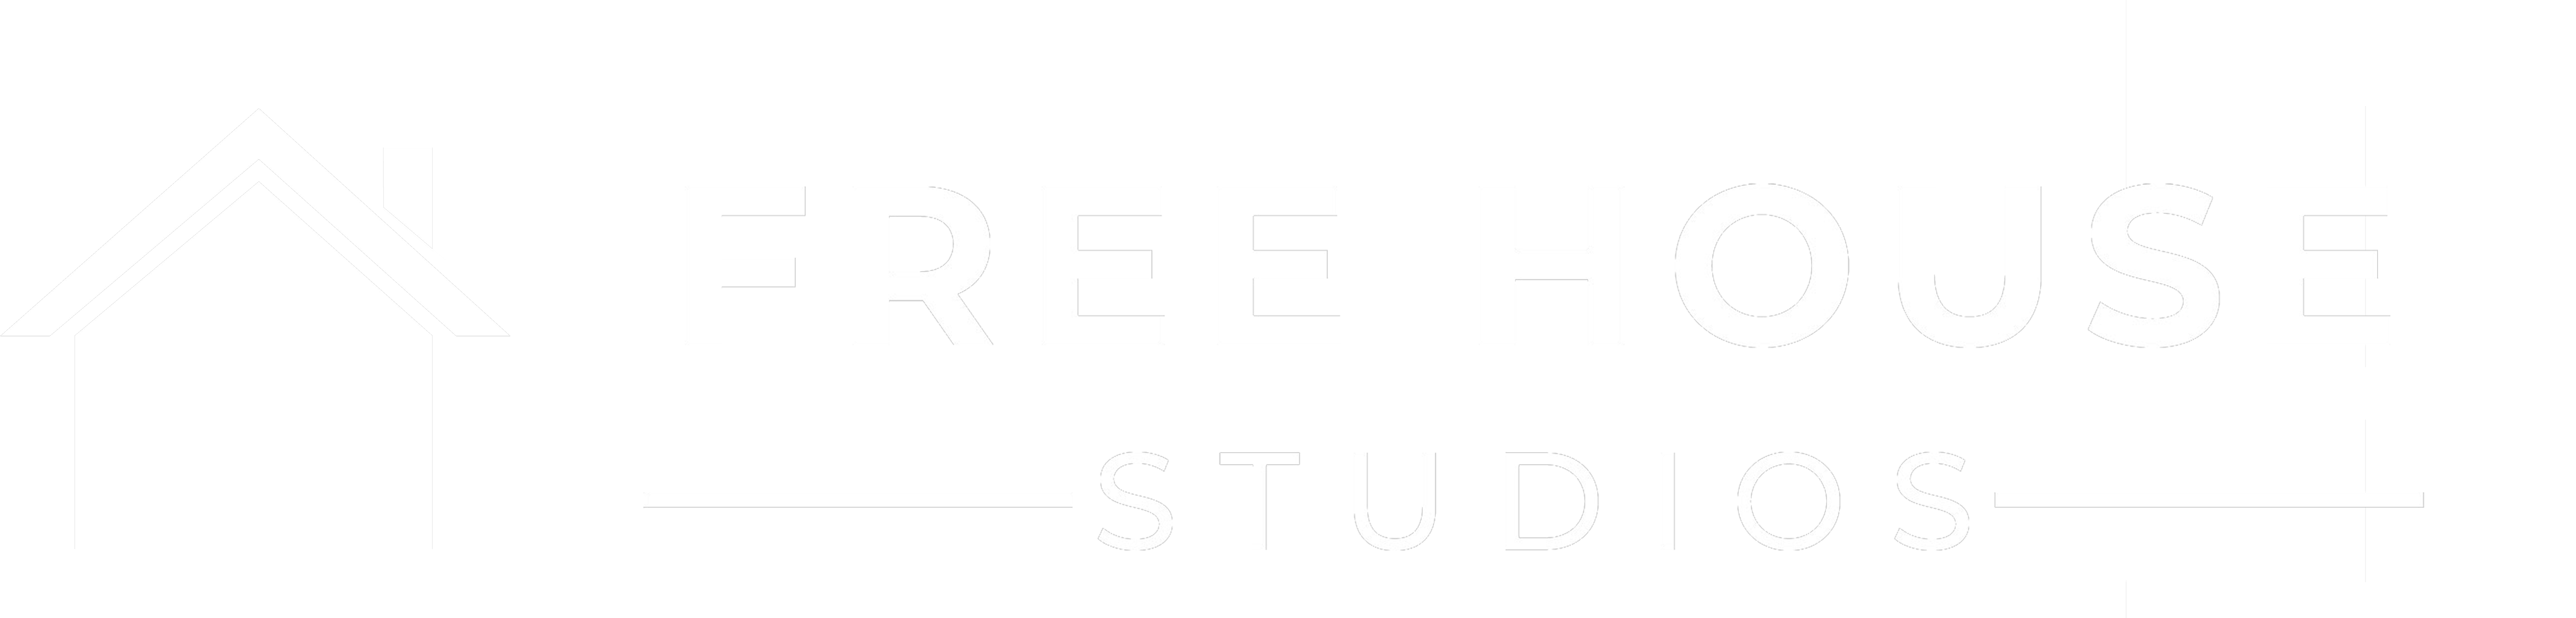 Recording Studio Bristol - Free House Studios